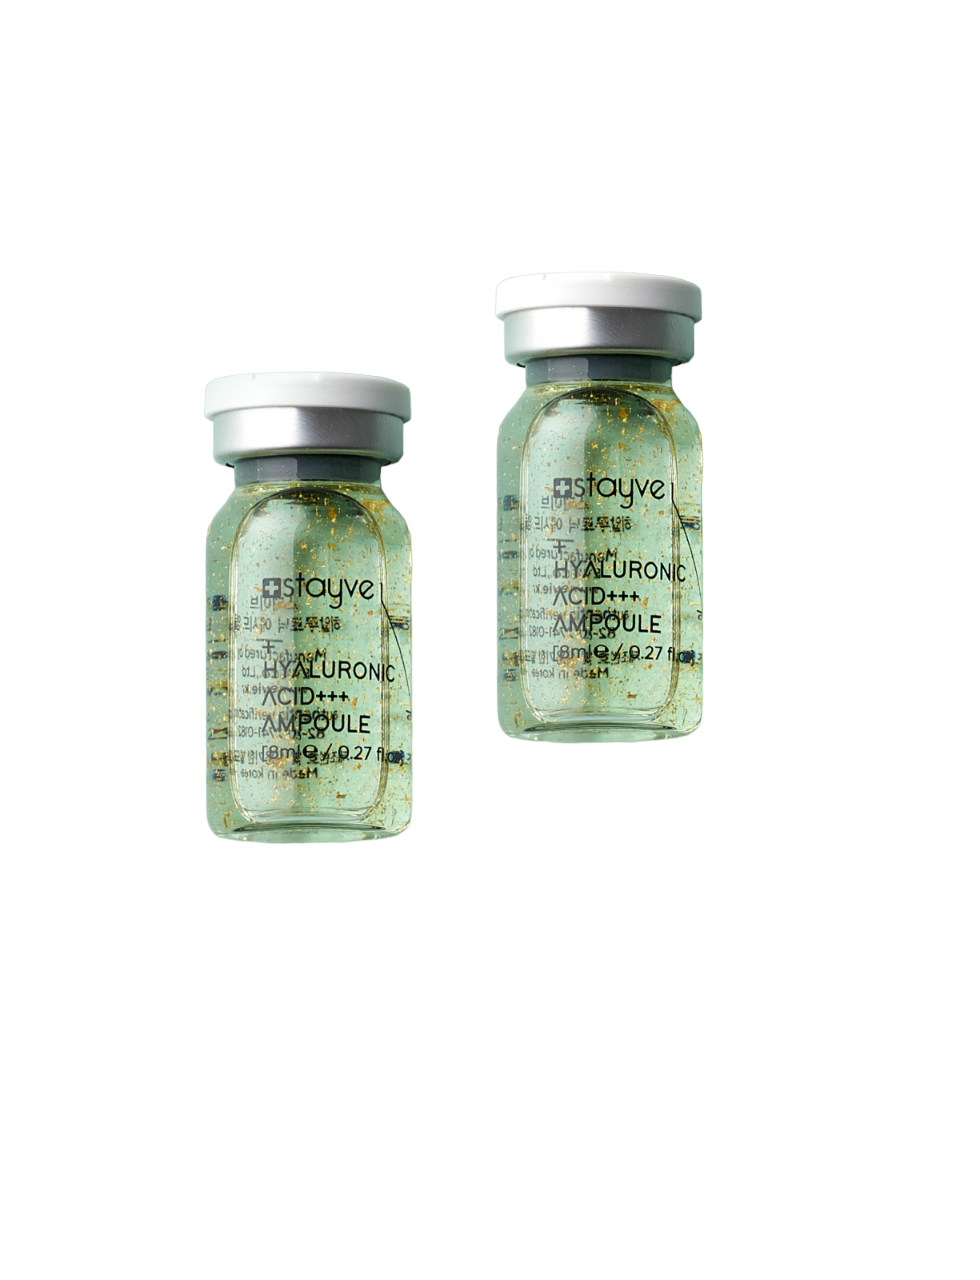 Сыворотка Stayve Гиалуроновая кислота для лица под мезороллер/дермапен, 2шт х 8мл BBG482-2 каталог андрей ройтер